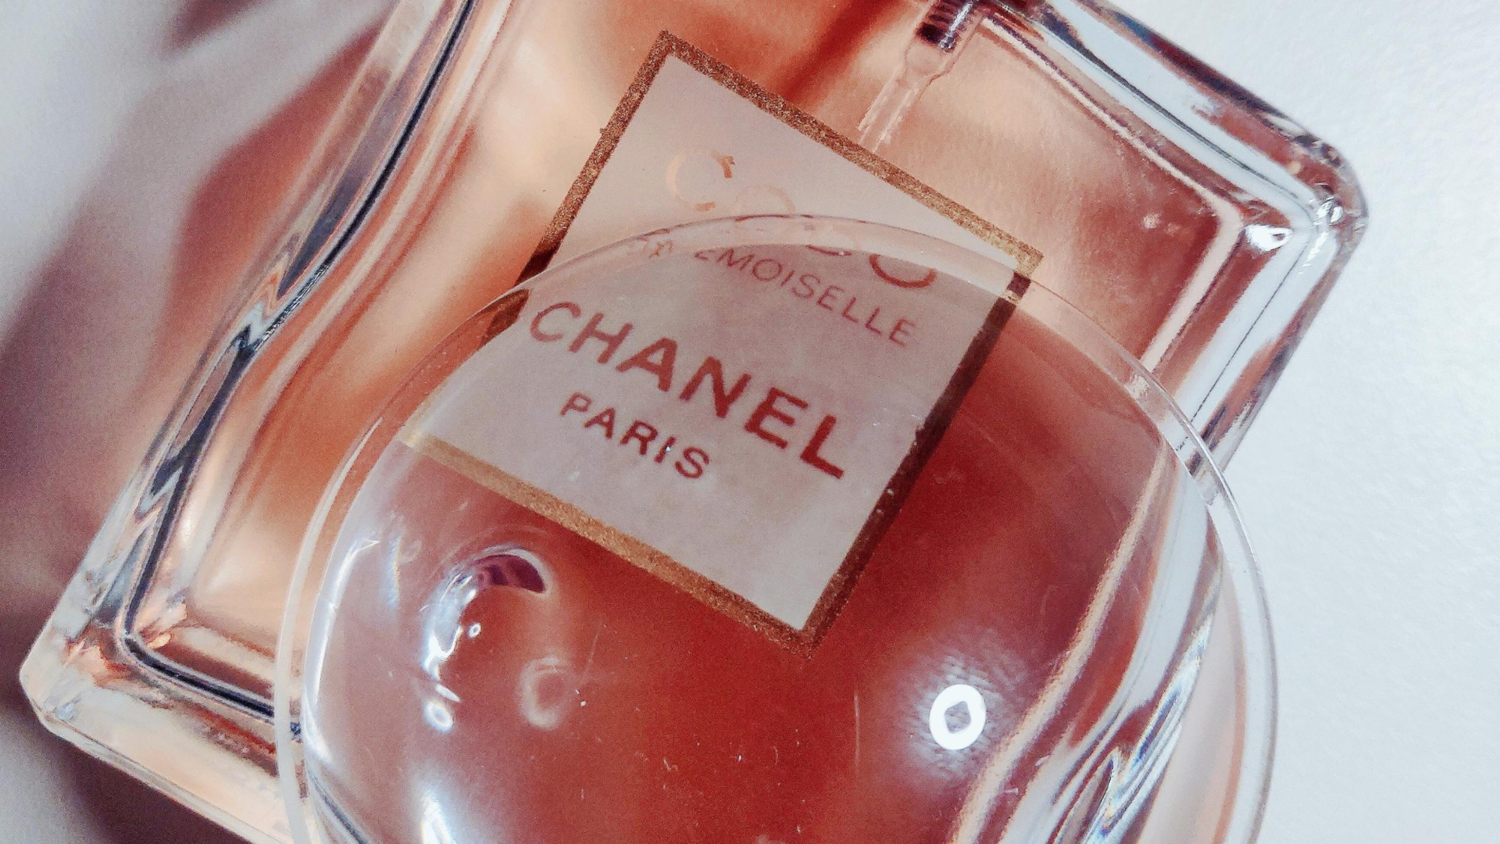 Chanel's Digital Strategy: Old Habits Die Hard